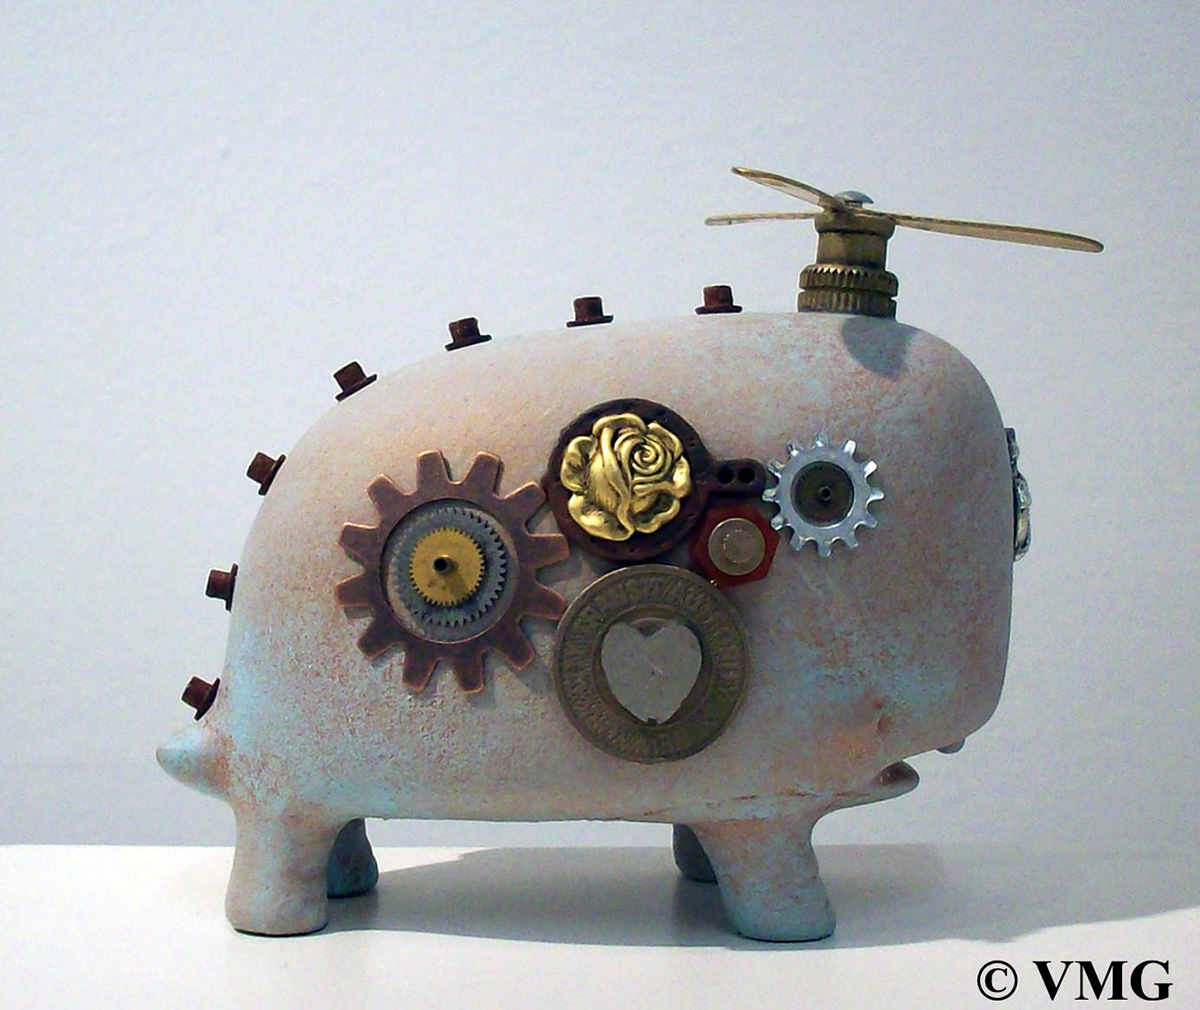 munko david choe Whale STEAMPUNK clockwork Custom Urban vinyl art toys